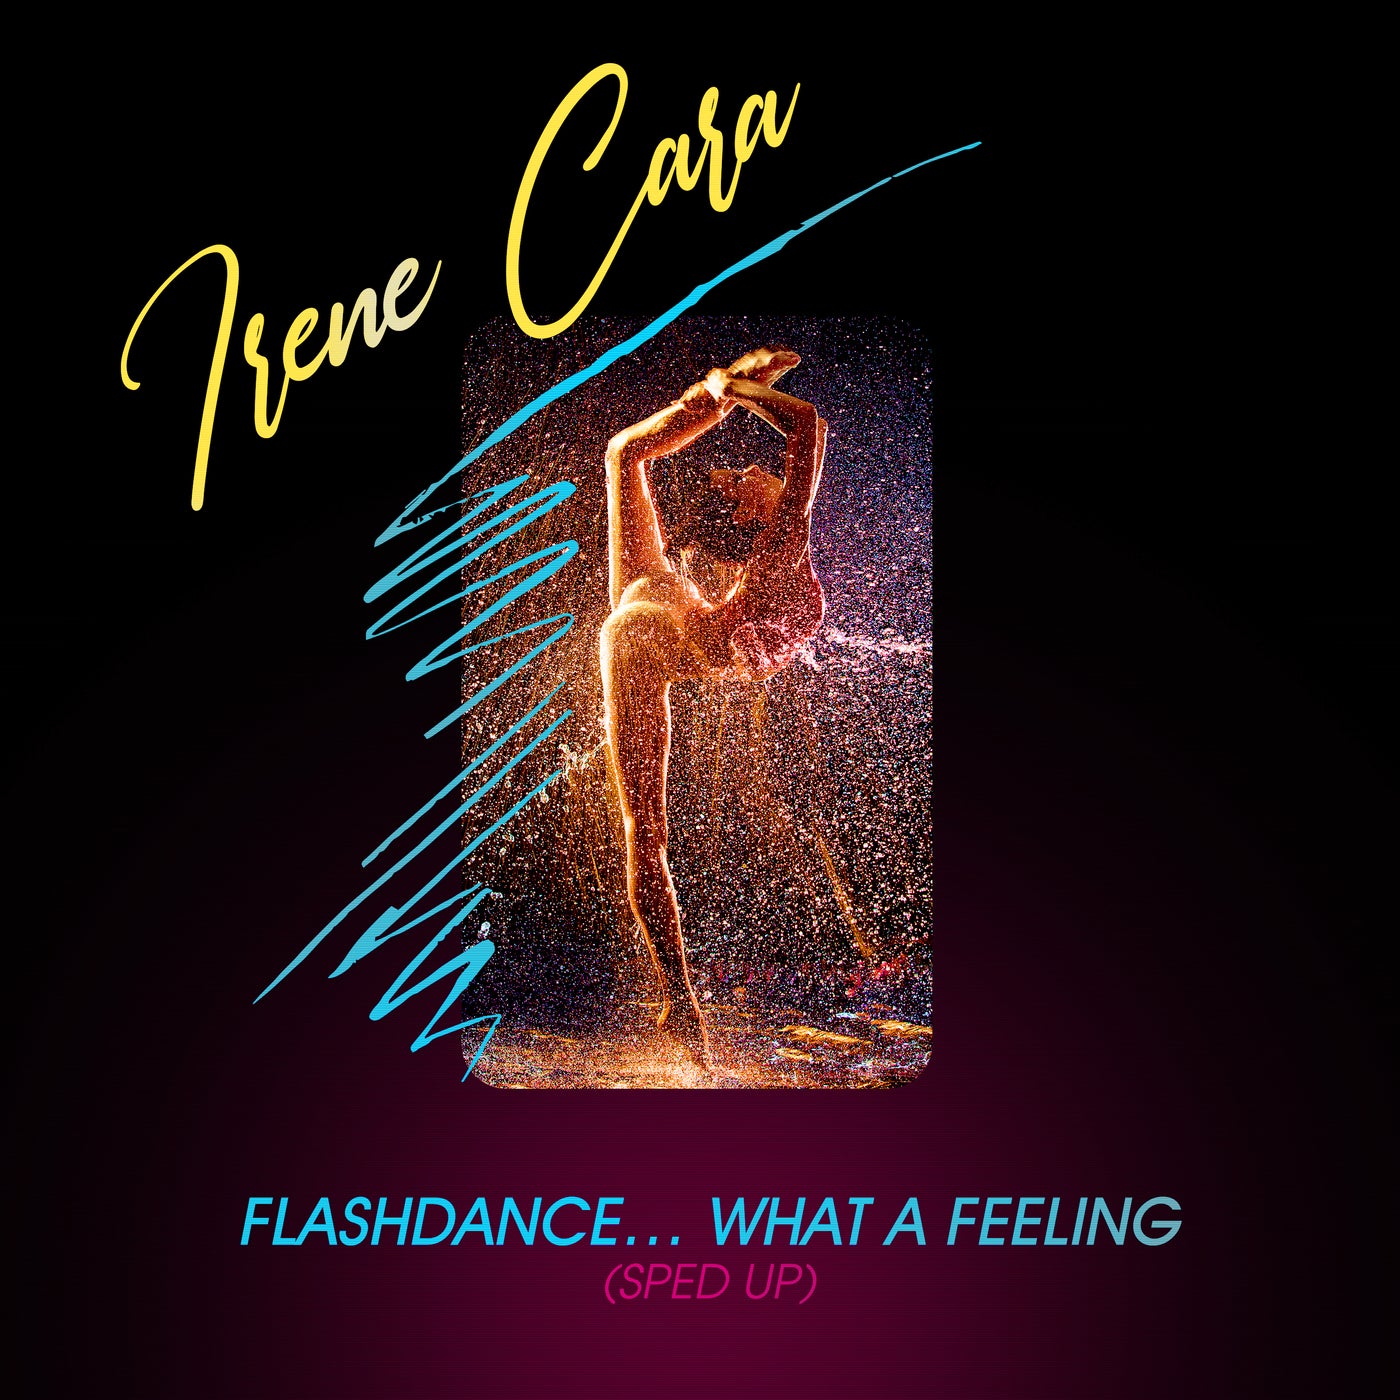 Flashdance what a feeling. Giorgio Moroder Irene cara - Flashdance... What a feeling.mp3.